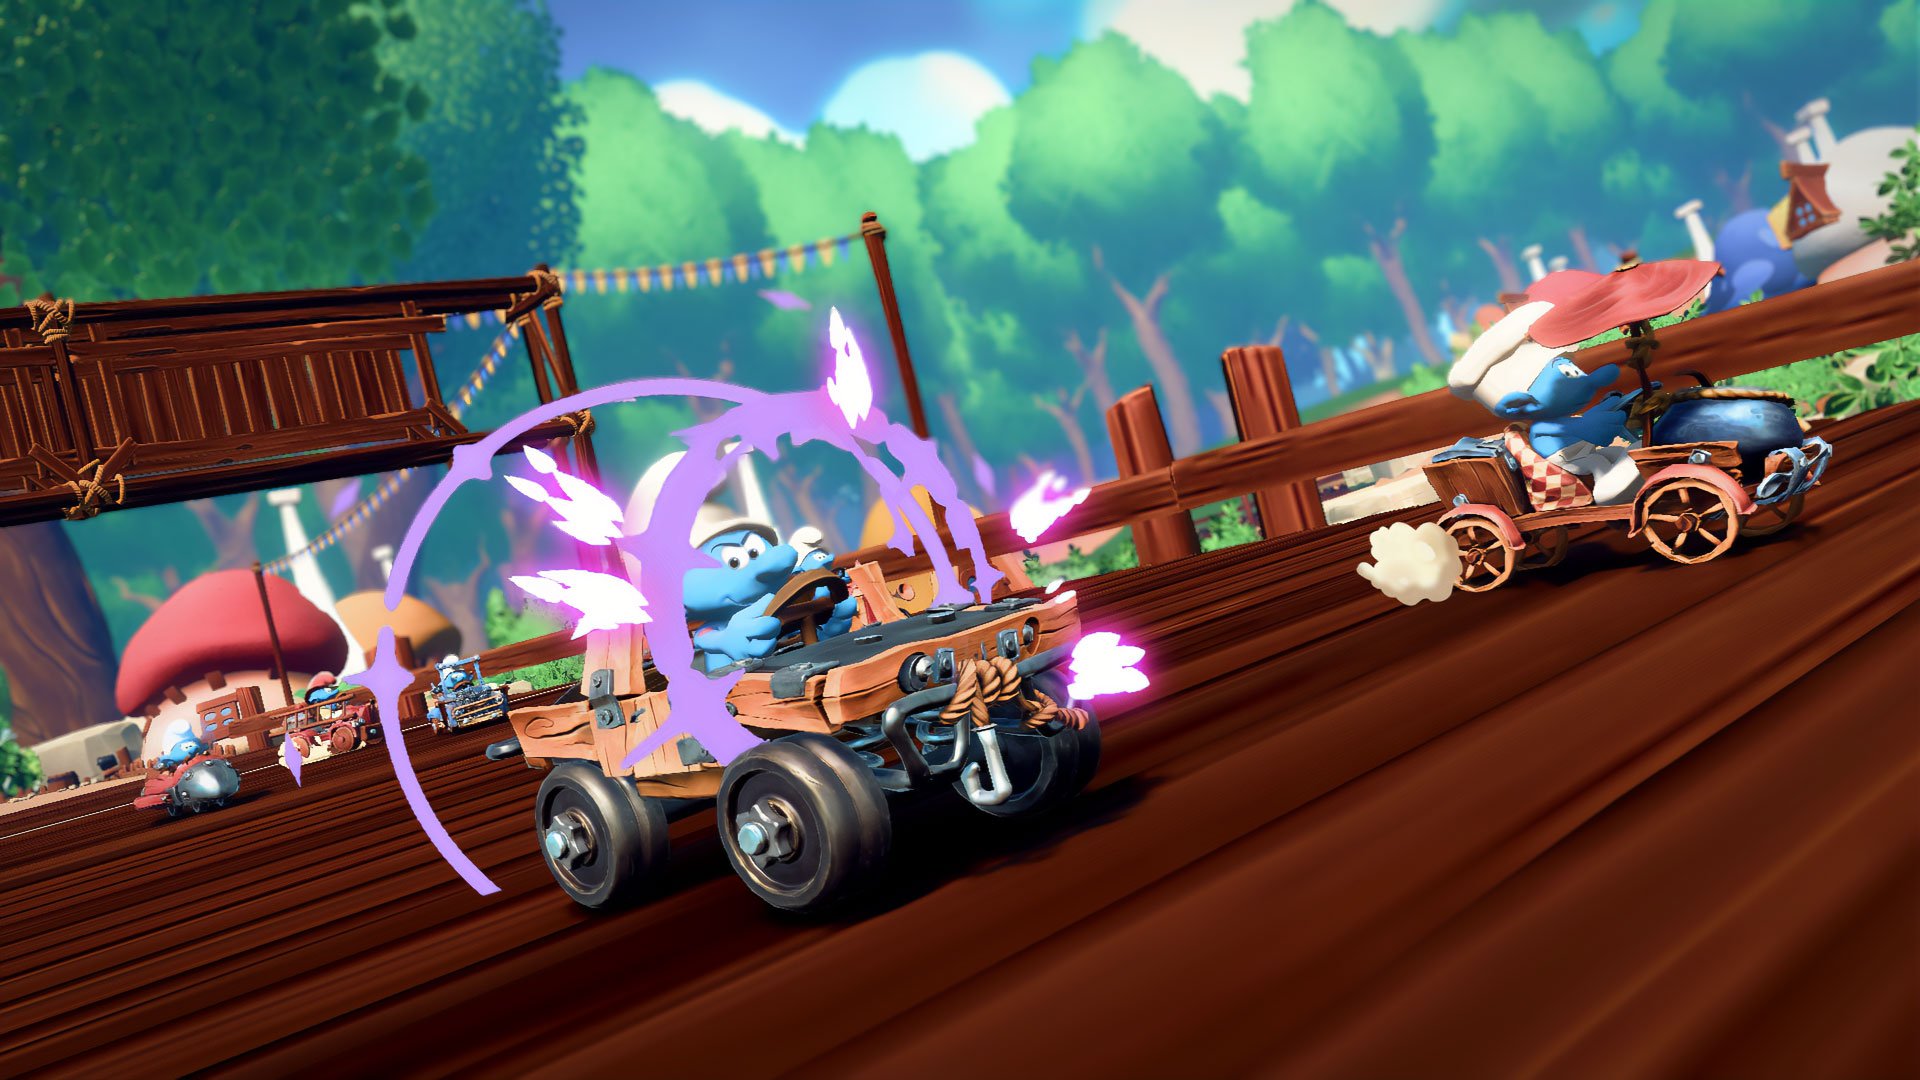 # Smurfs Kart launches November 15